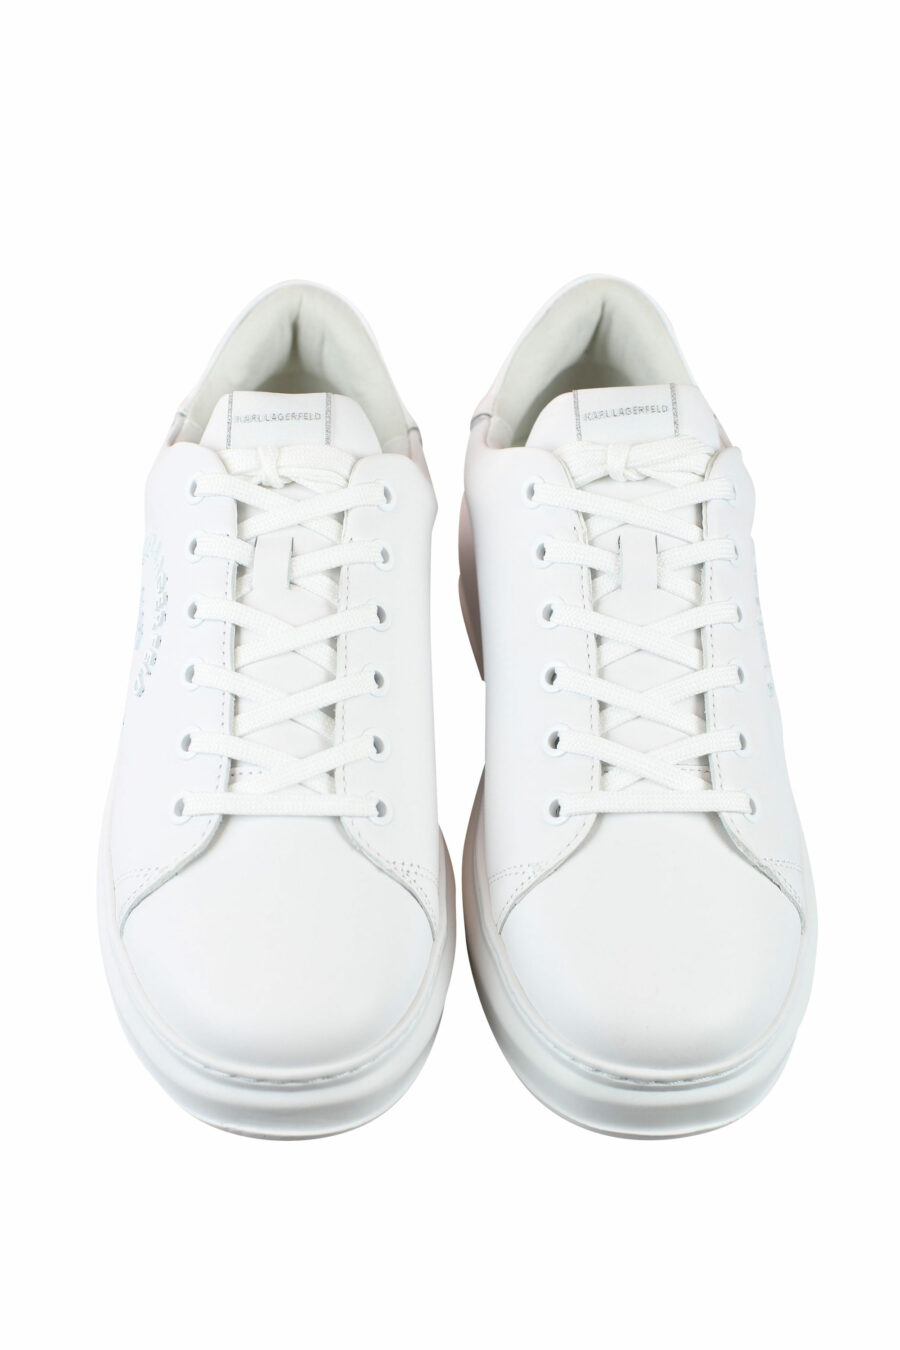 Zapatillas blancas con logo "rue st guillaume" blanco - IMG 9998